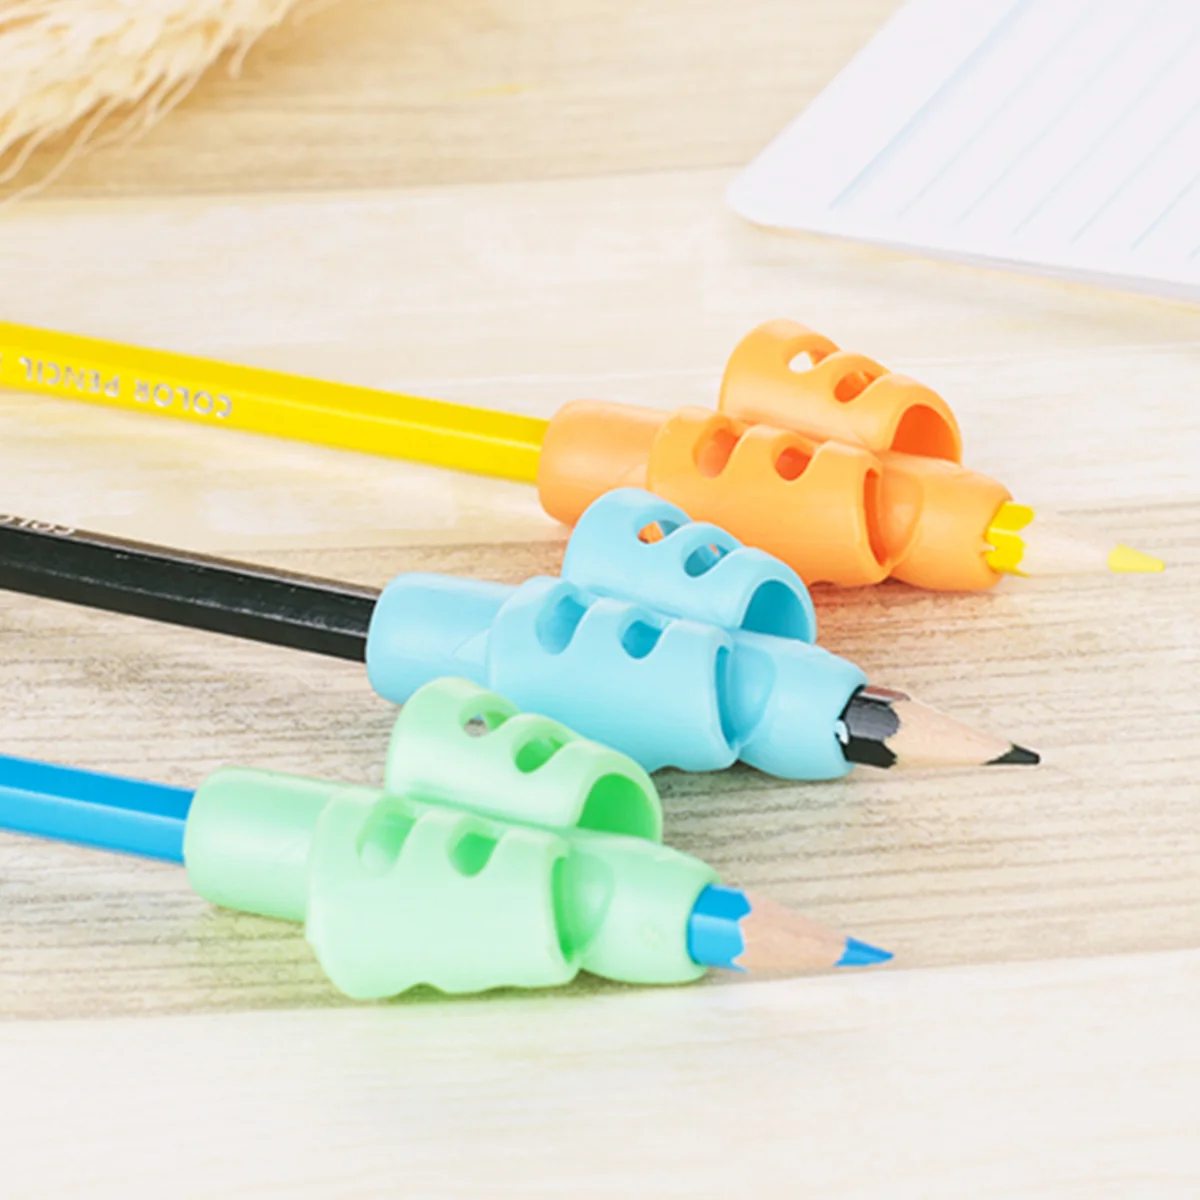 

3pcs Pencil Holder Writing Aid Grip Writing Posture Correction Device for Preschoolers Kindergarten Toddler Kids (Blue, Orange,